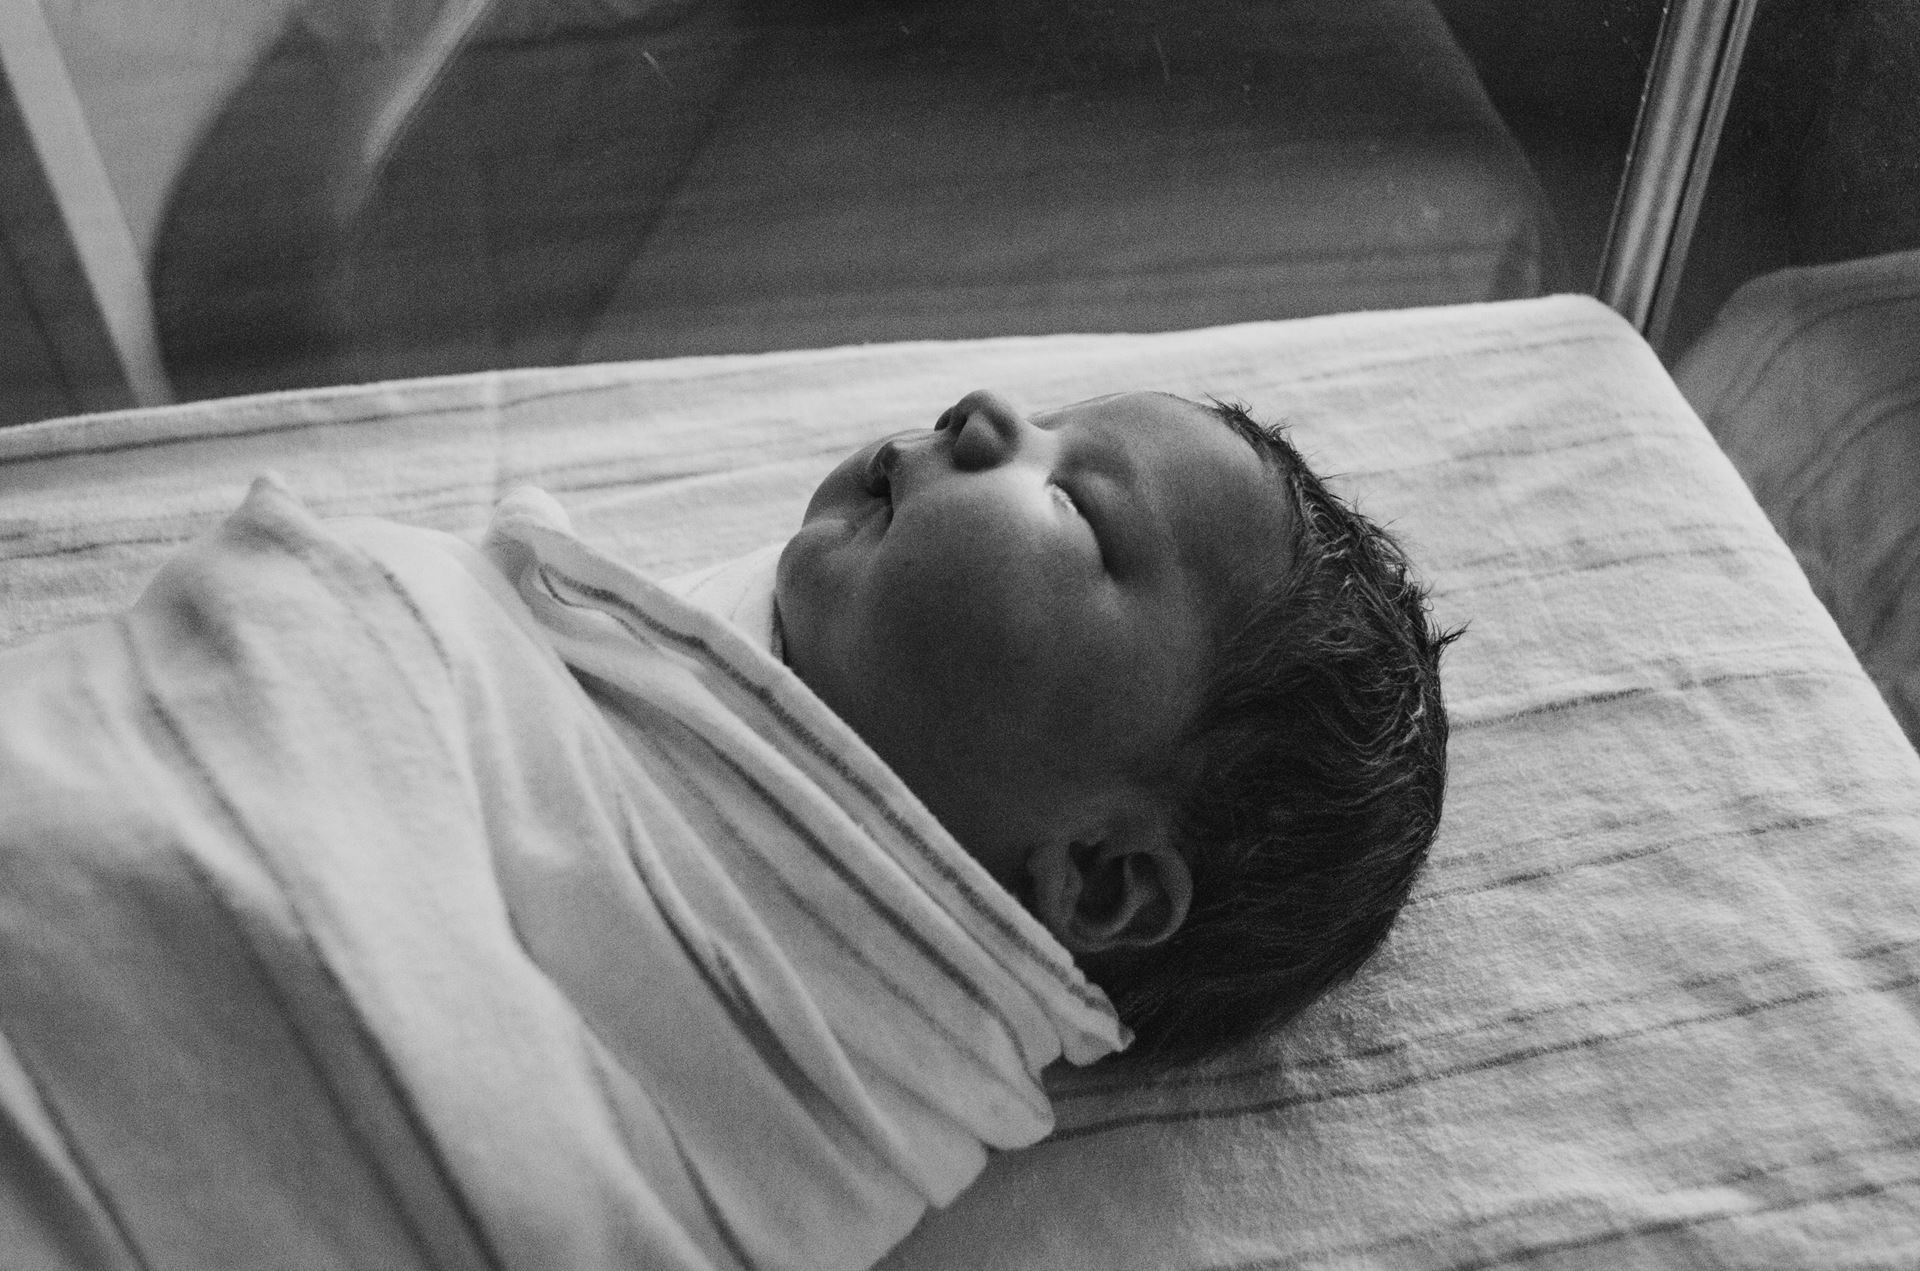 black & white image of sleeping newborn baby swaddled in a blanket. Photo by Kelly Sikkema on Unsplash.